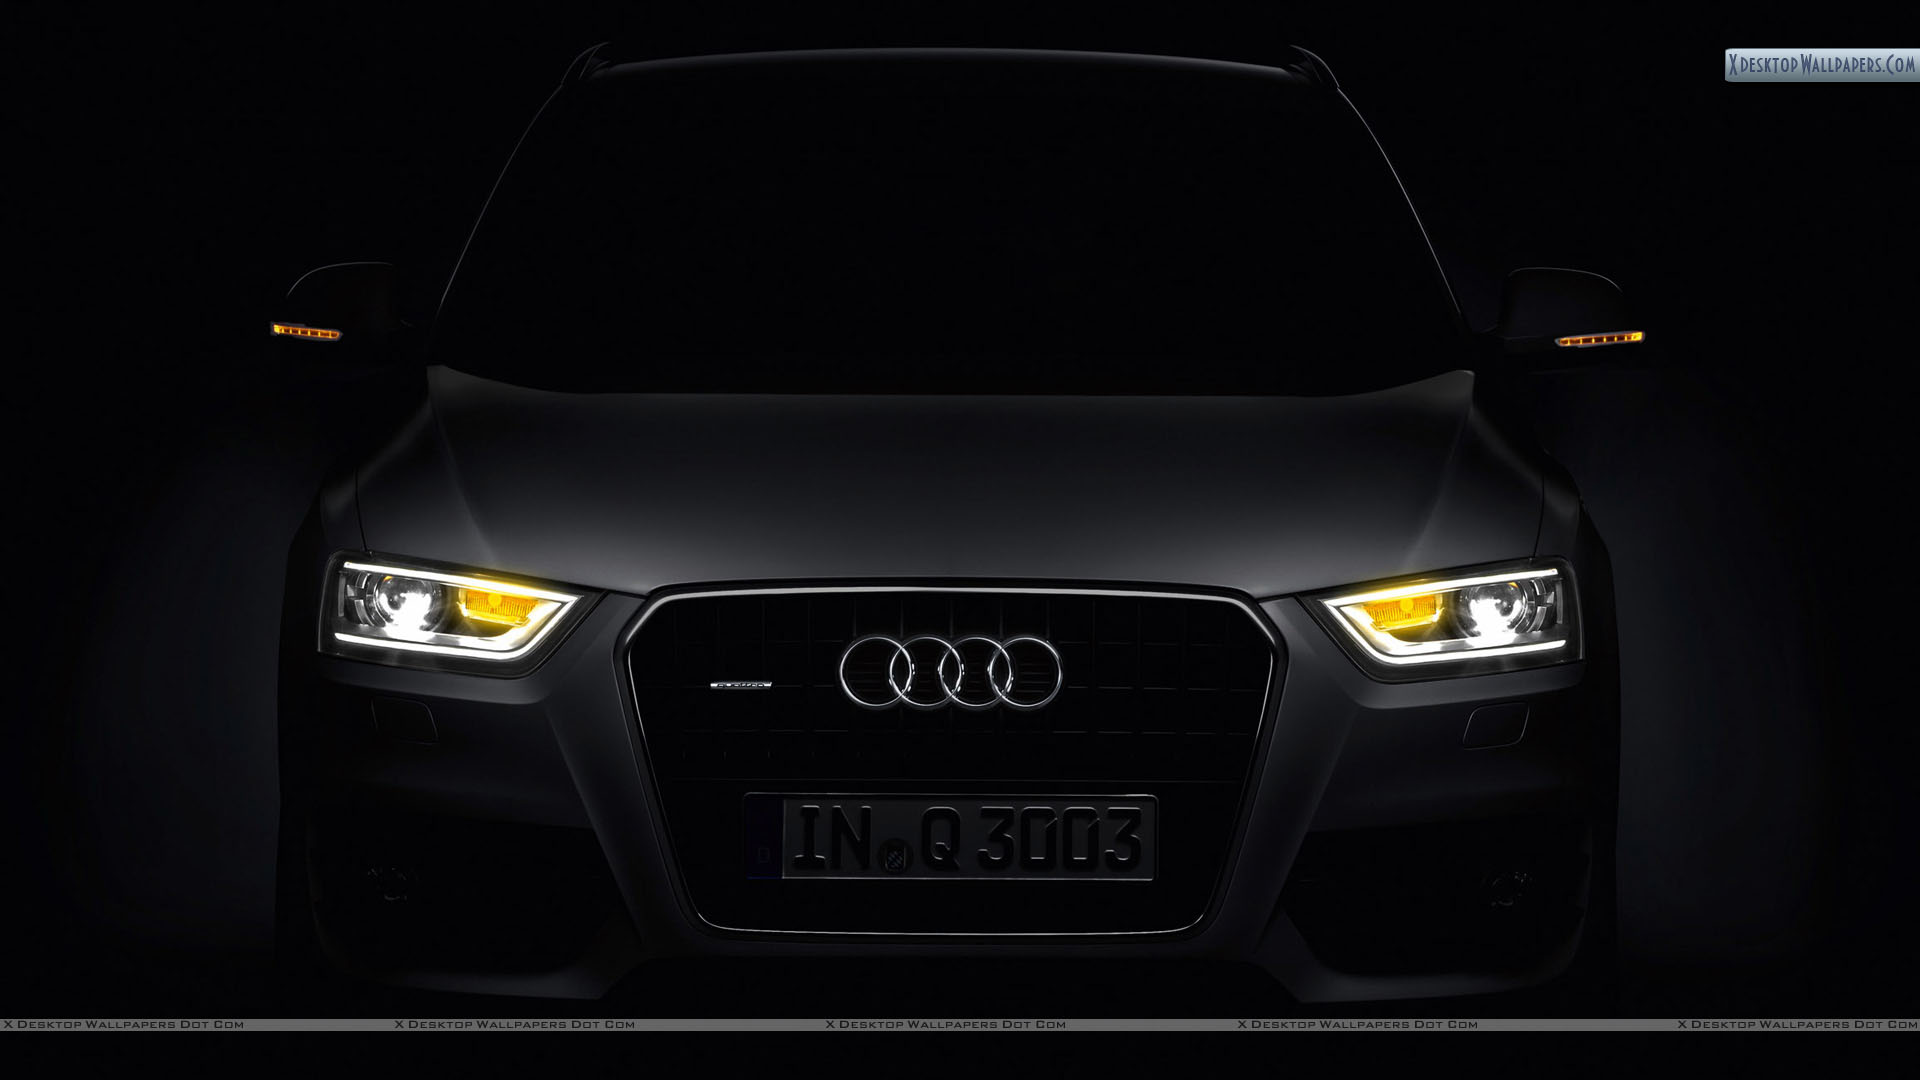 Audi Q3 Front Picture In Dark Wallpaper